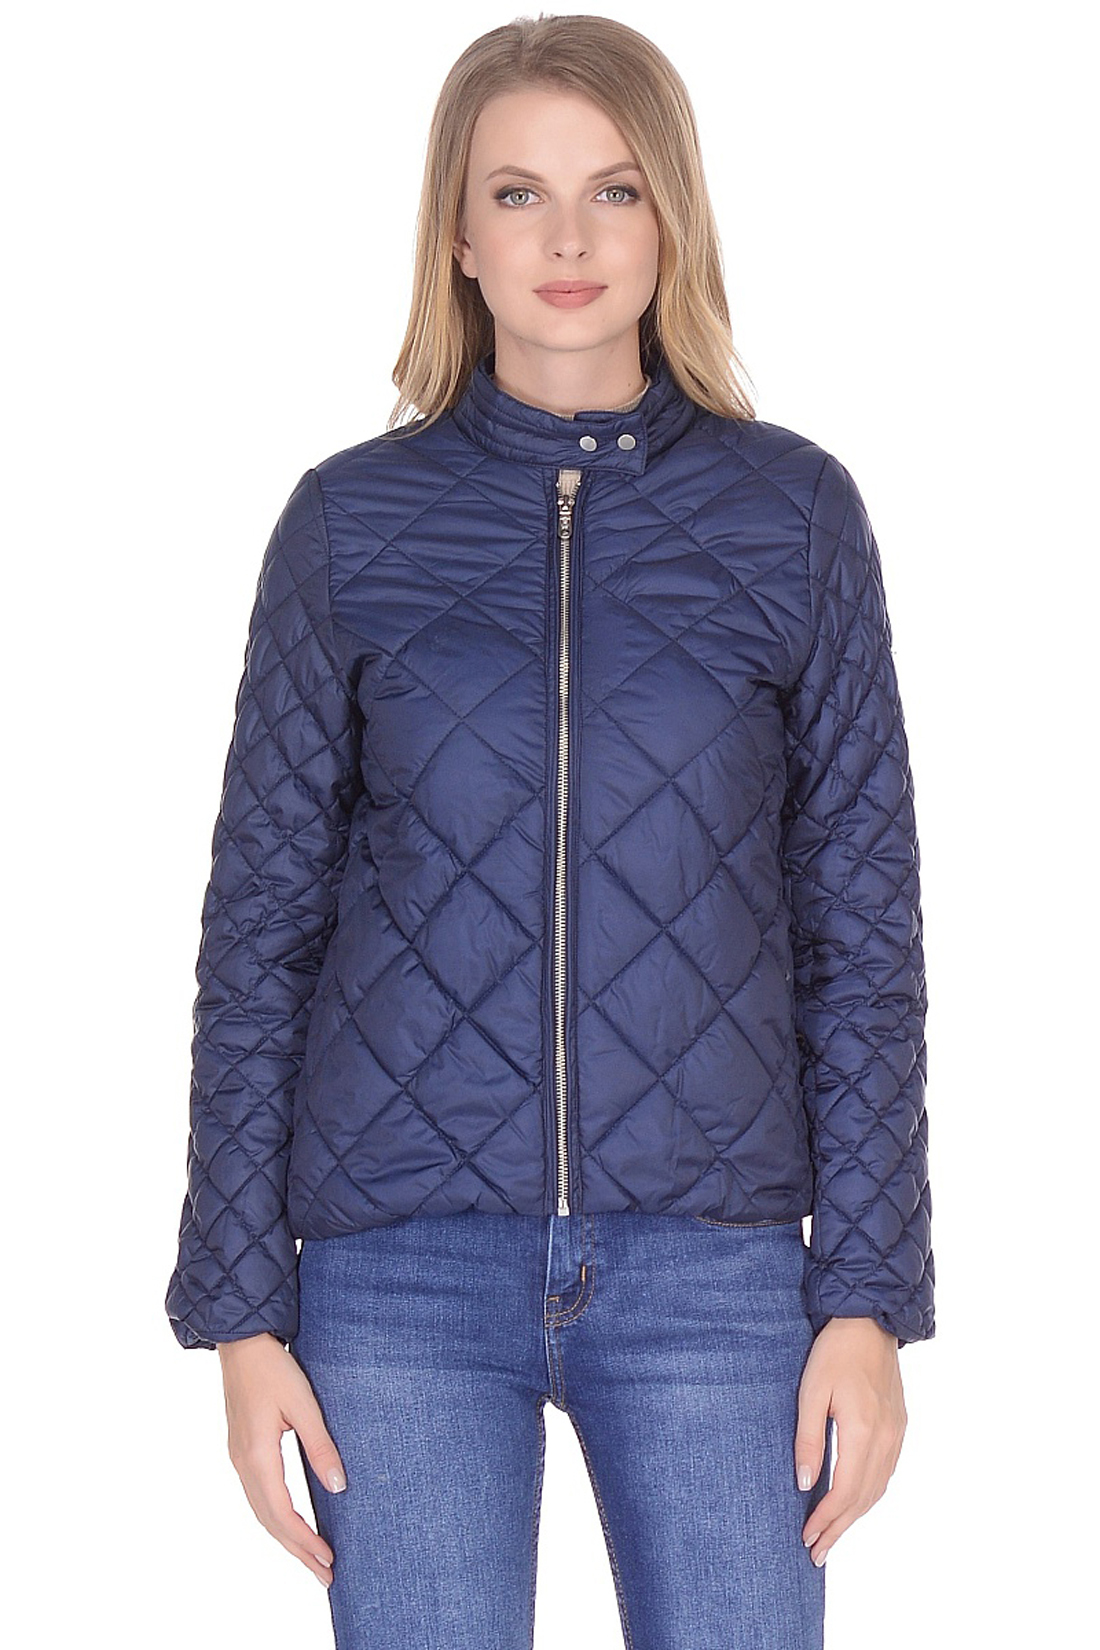 Куртка с простёжкой ромбами (арт. baon B038047), размер L, цвет синий Куртка с простёжкой ромбами (арт. baon B038047) - фото 1